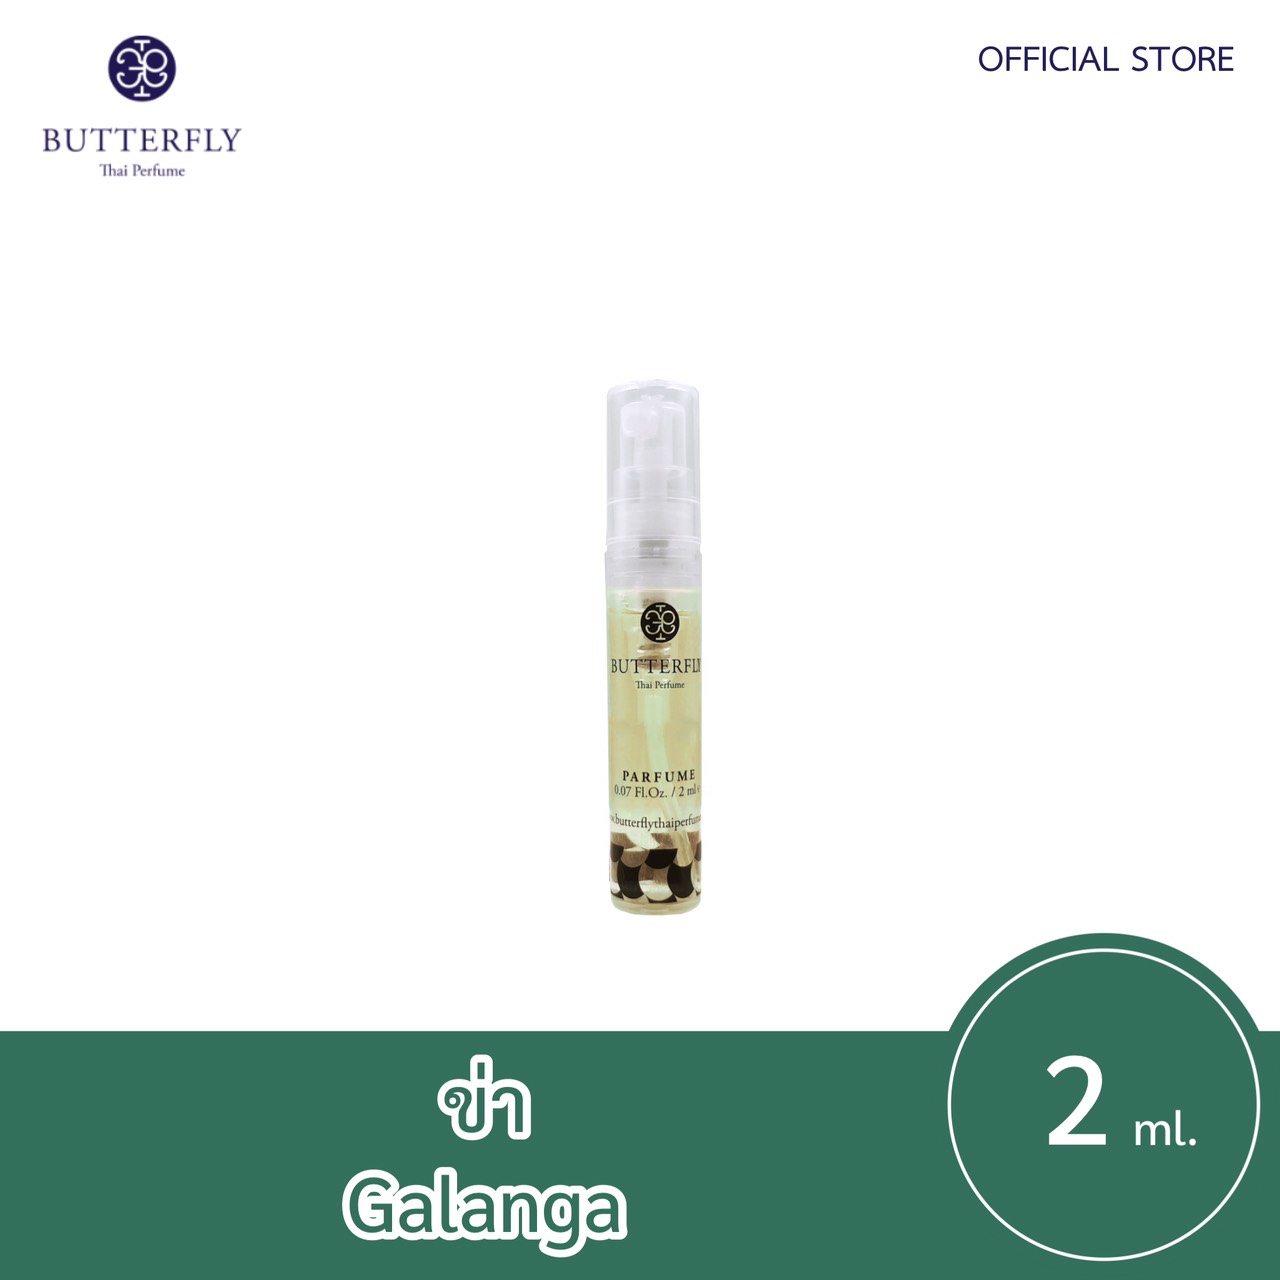 Butterfly Thai Perfume - น้ำหอมบัตเตอร์ฟลาย ไทย เพอร์ฟูม  ขนาดทดลอง 2ml.  กลิ่น ส้มโอปริมาณ (มล.) 2